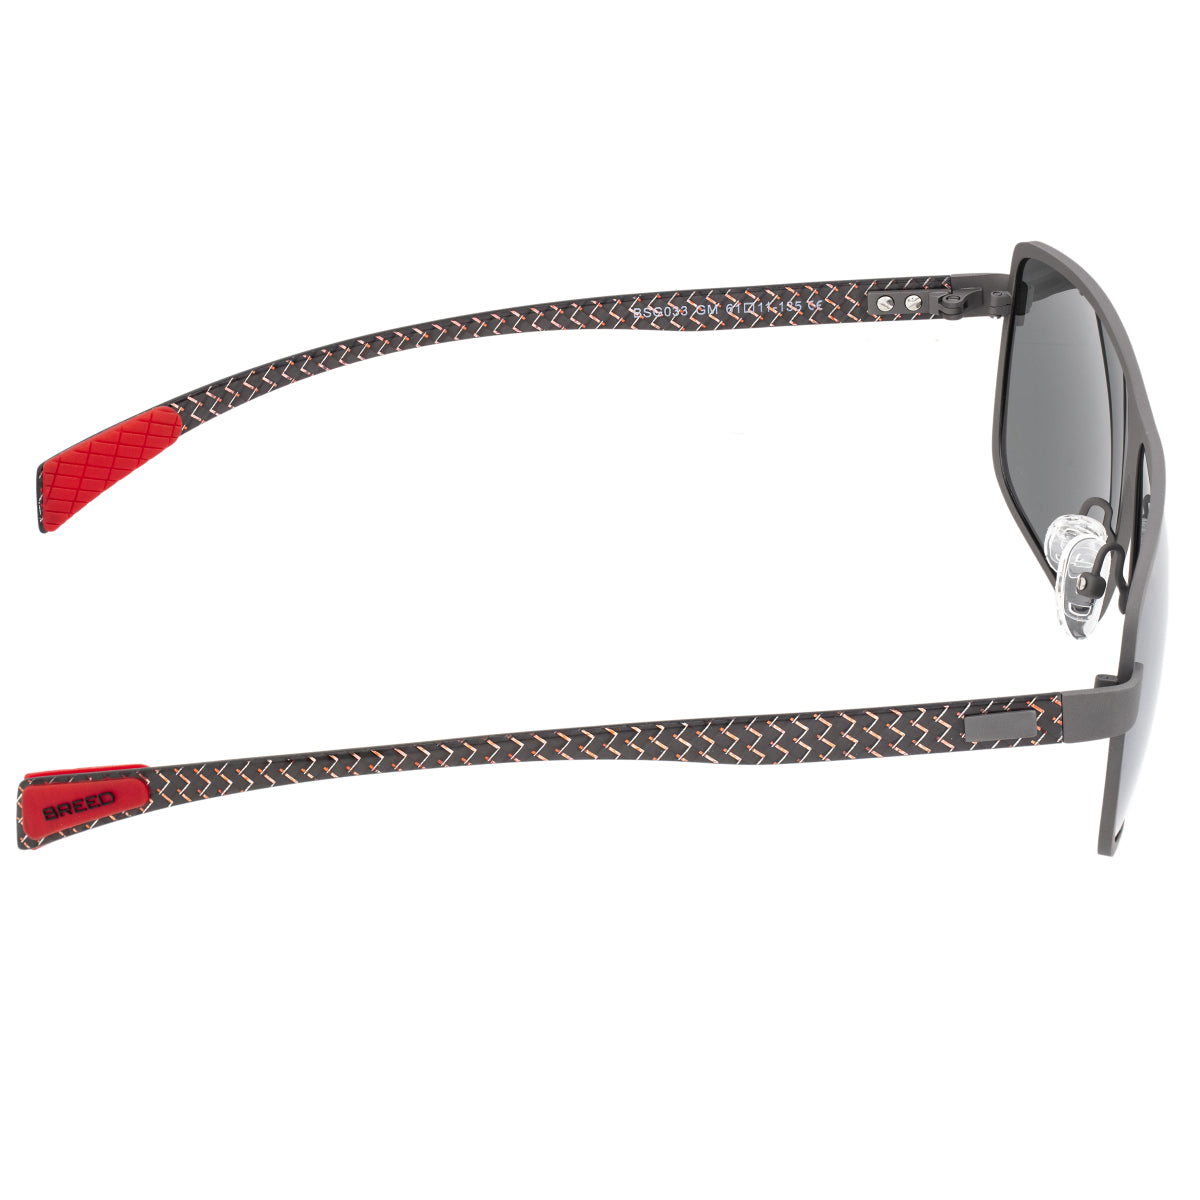 Breed Finlay Titanium Polarized Sunglasses - Gunmetal/Black - BSG033GM